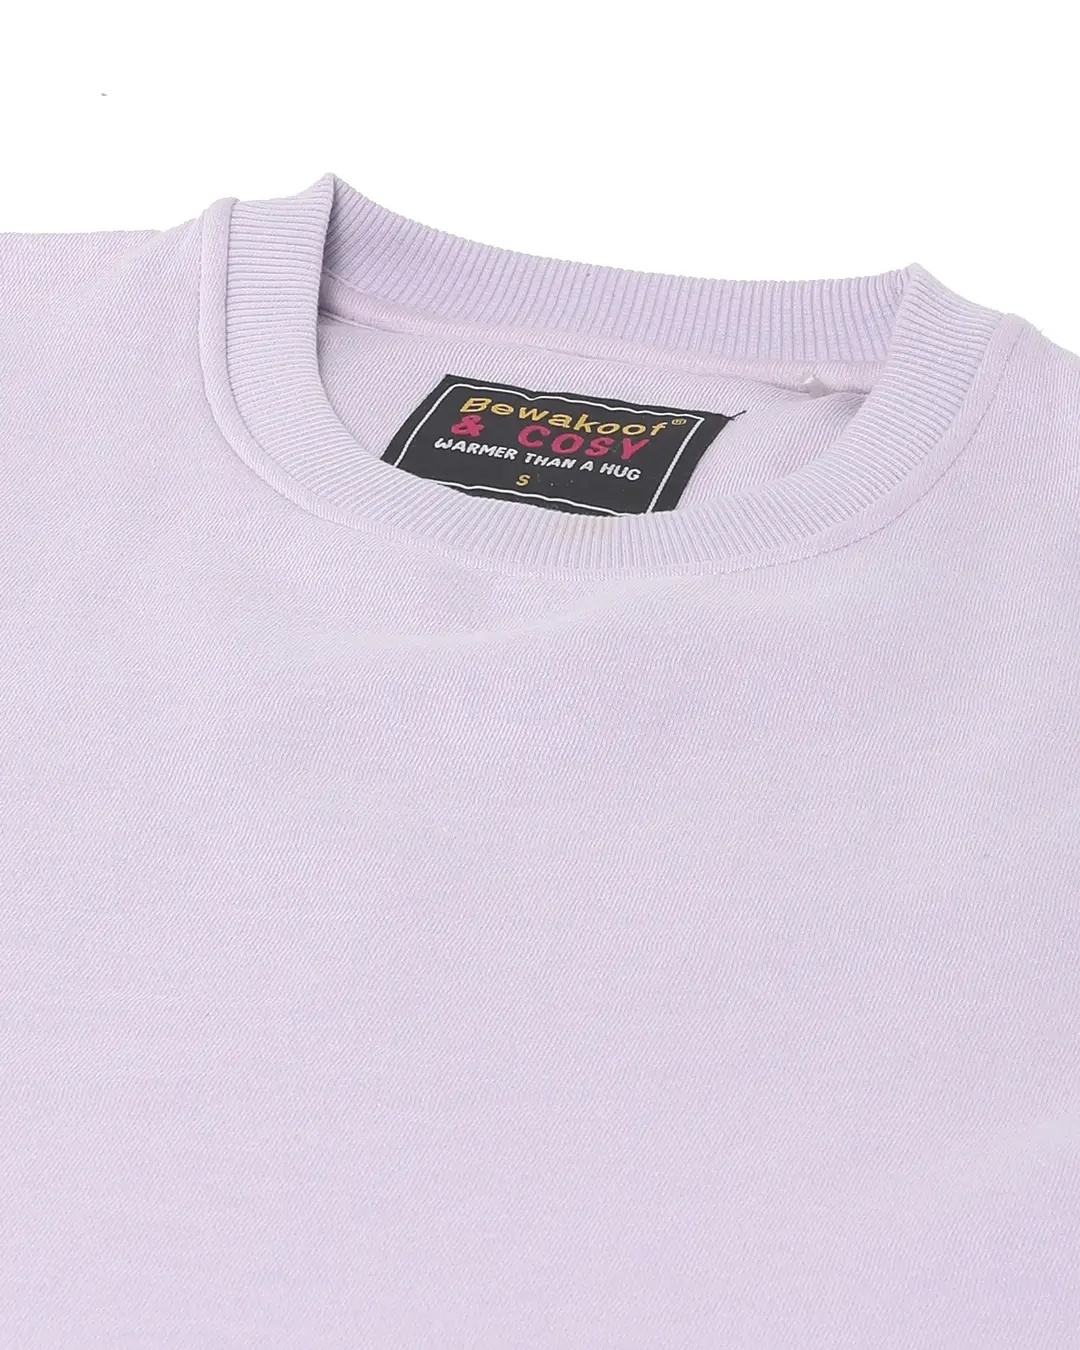 Shop Women's Lavender Printed Lilac Sweatshirt